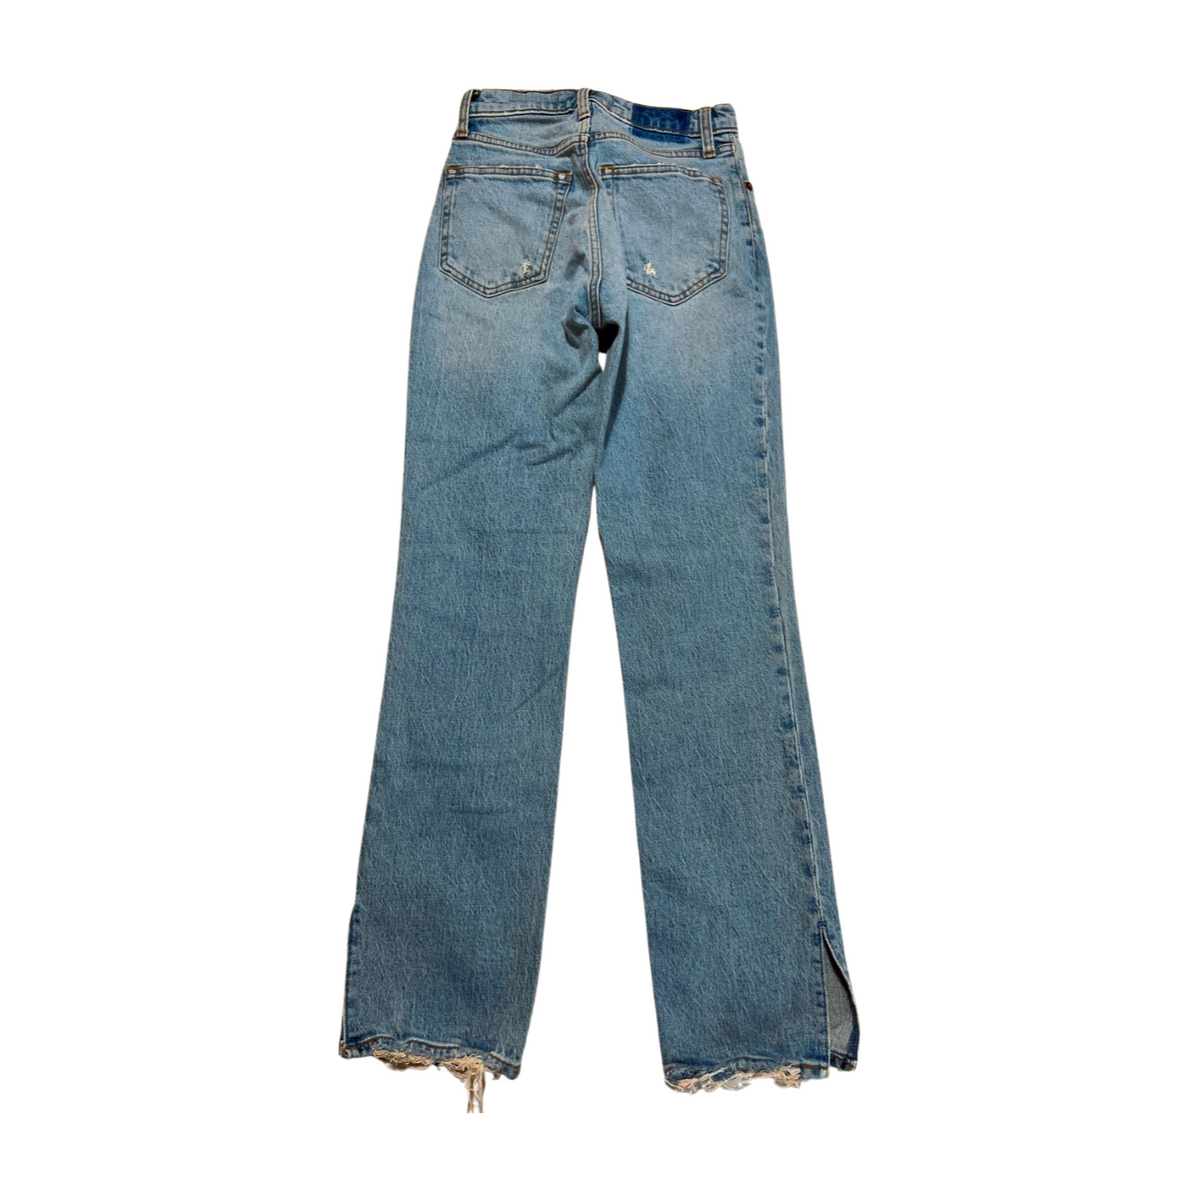 Abercrombie & Fitch- Light Wash Split Ankle Jeans